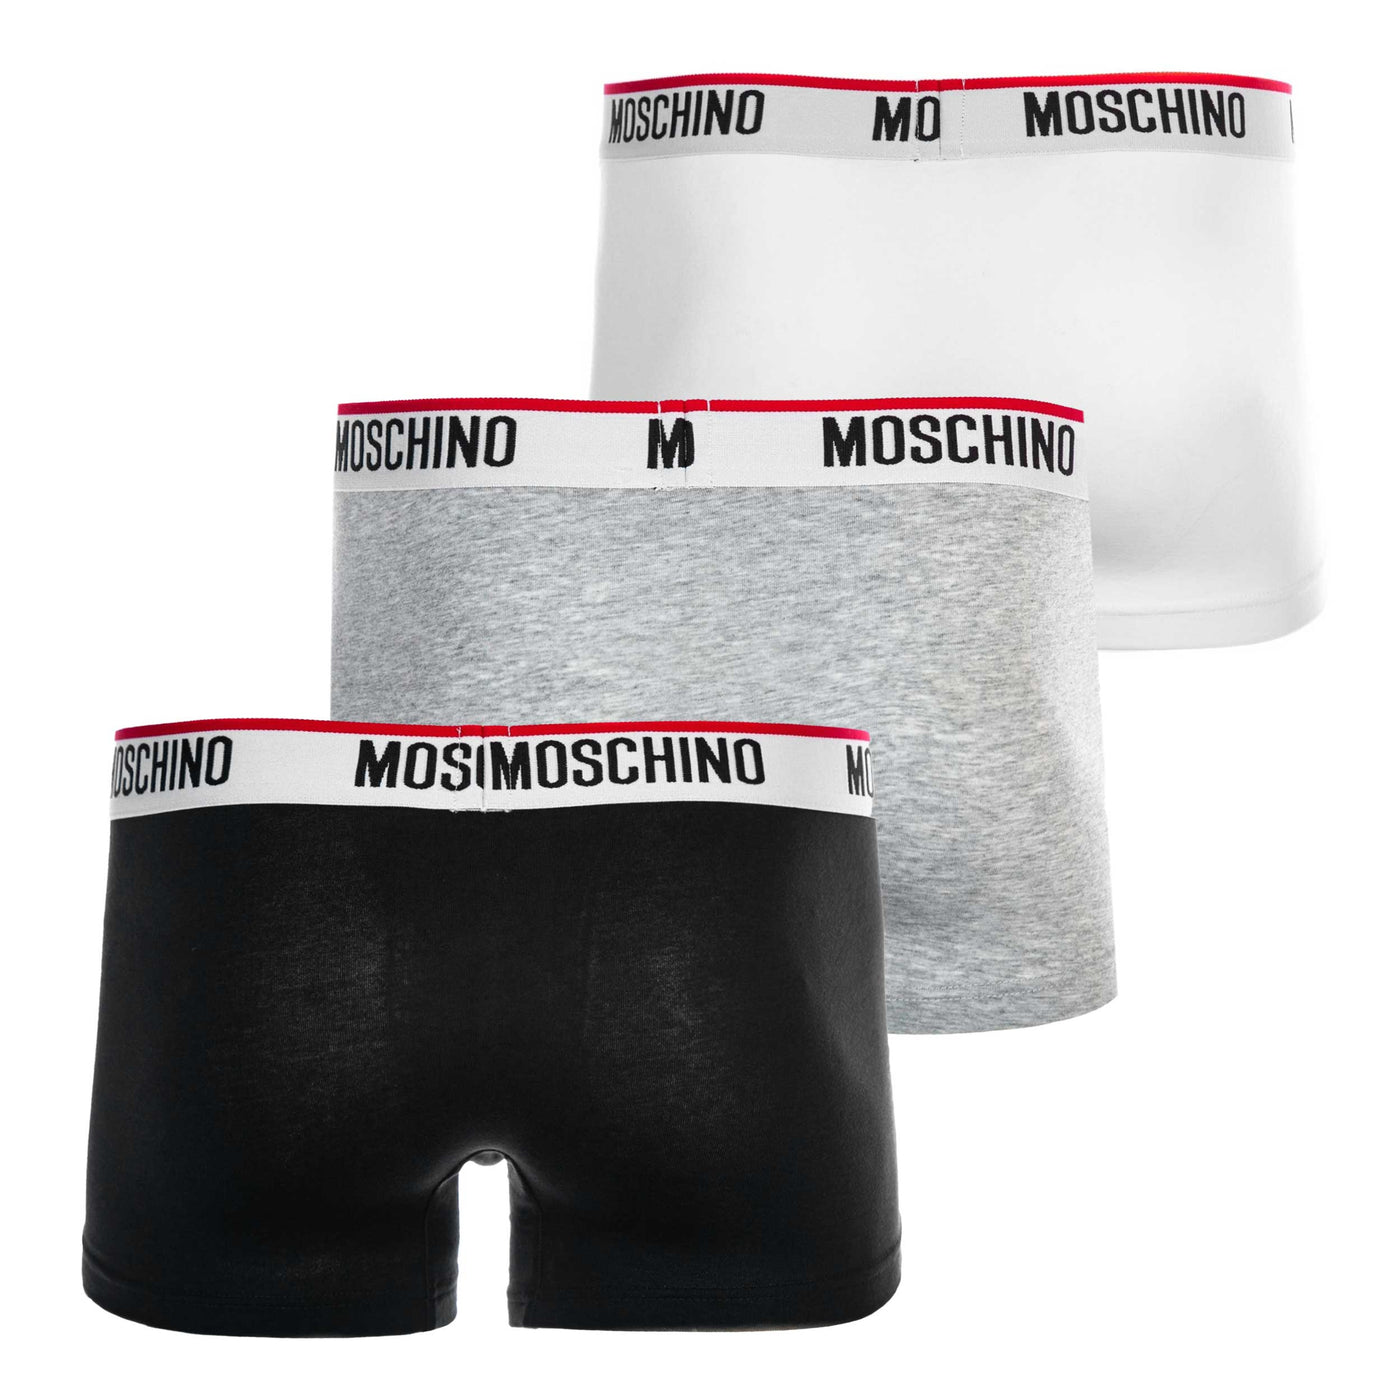 Moschino Underwear Tri Pack Boxers in Black, White & Grey I